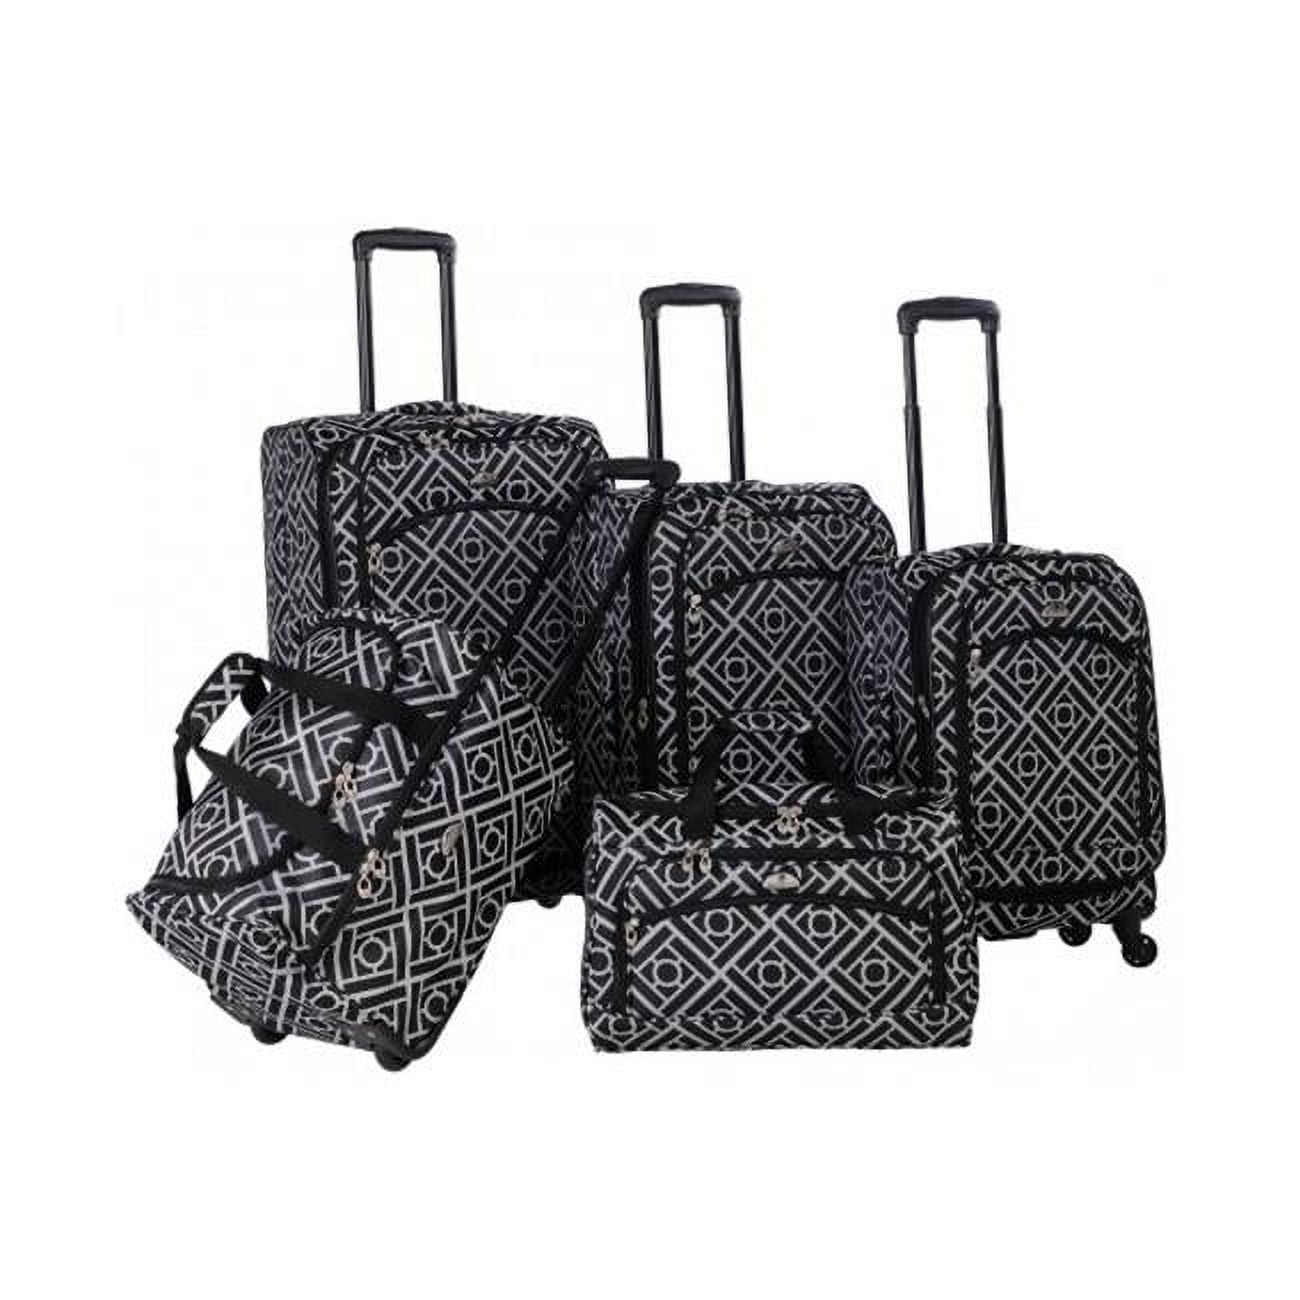 Pujas AF Astor Luggage Set - Black & White - 5 Piece